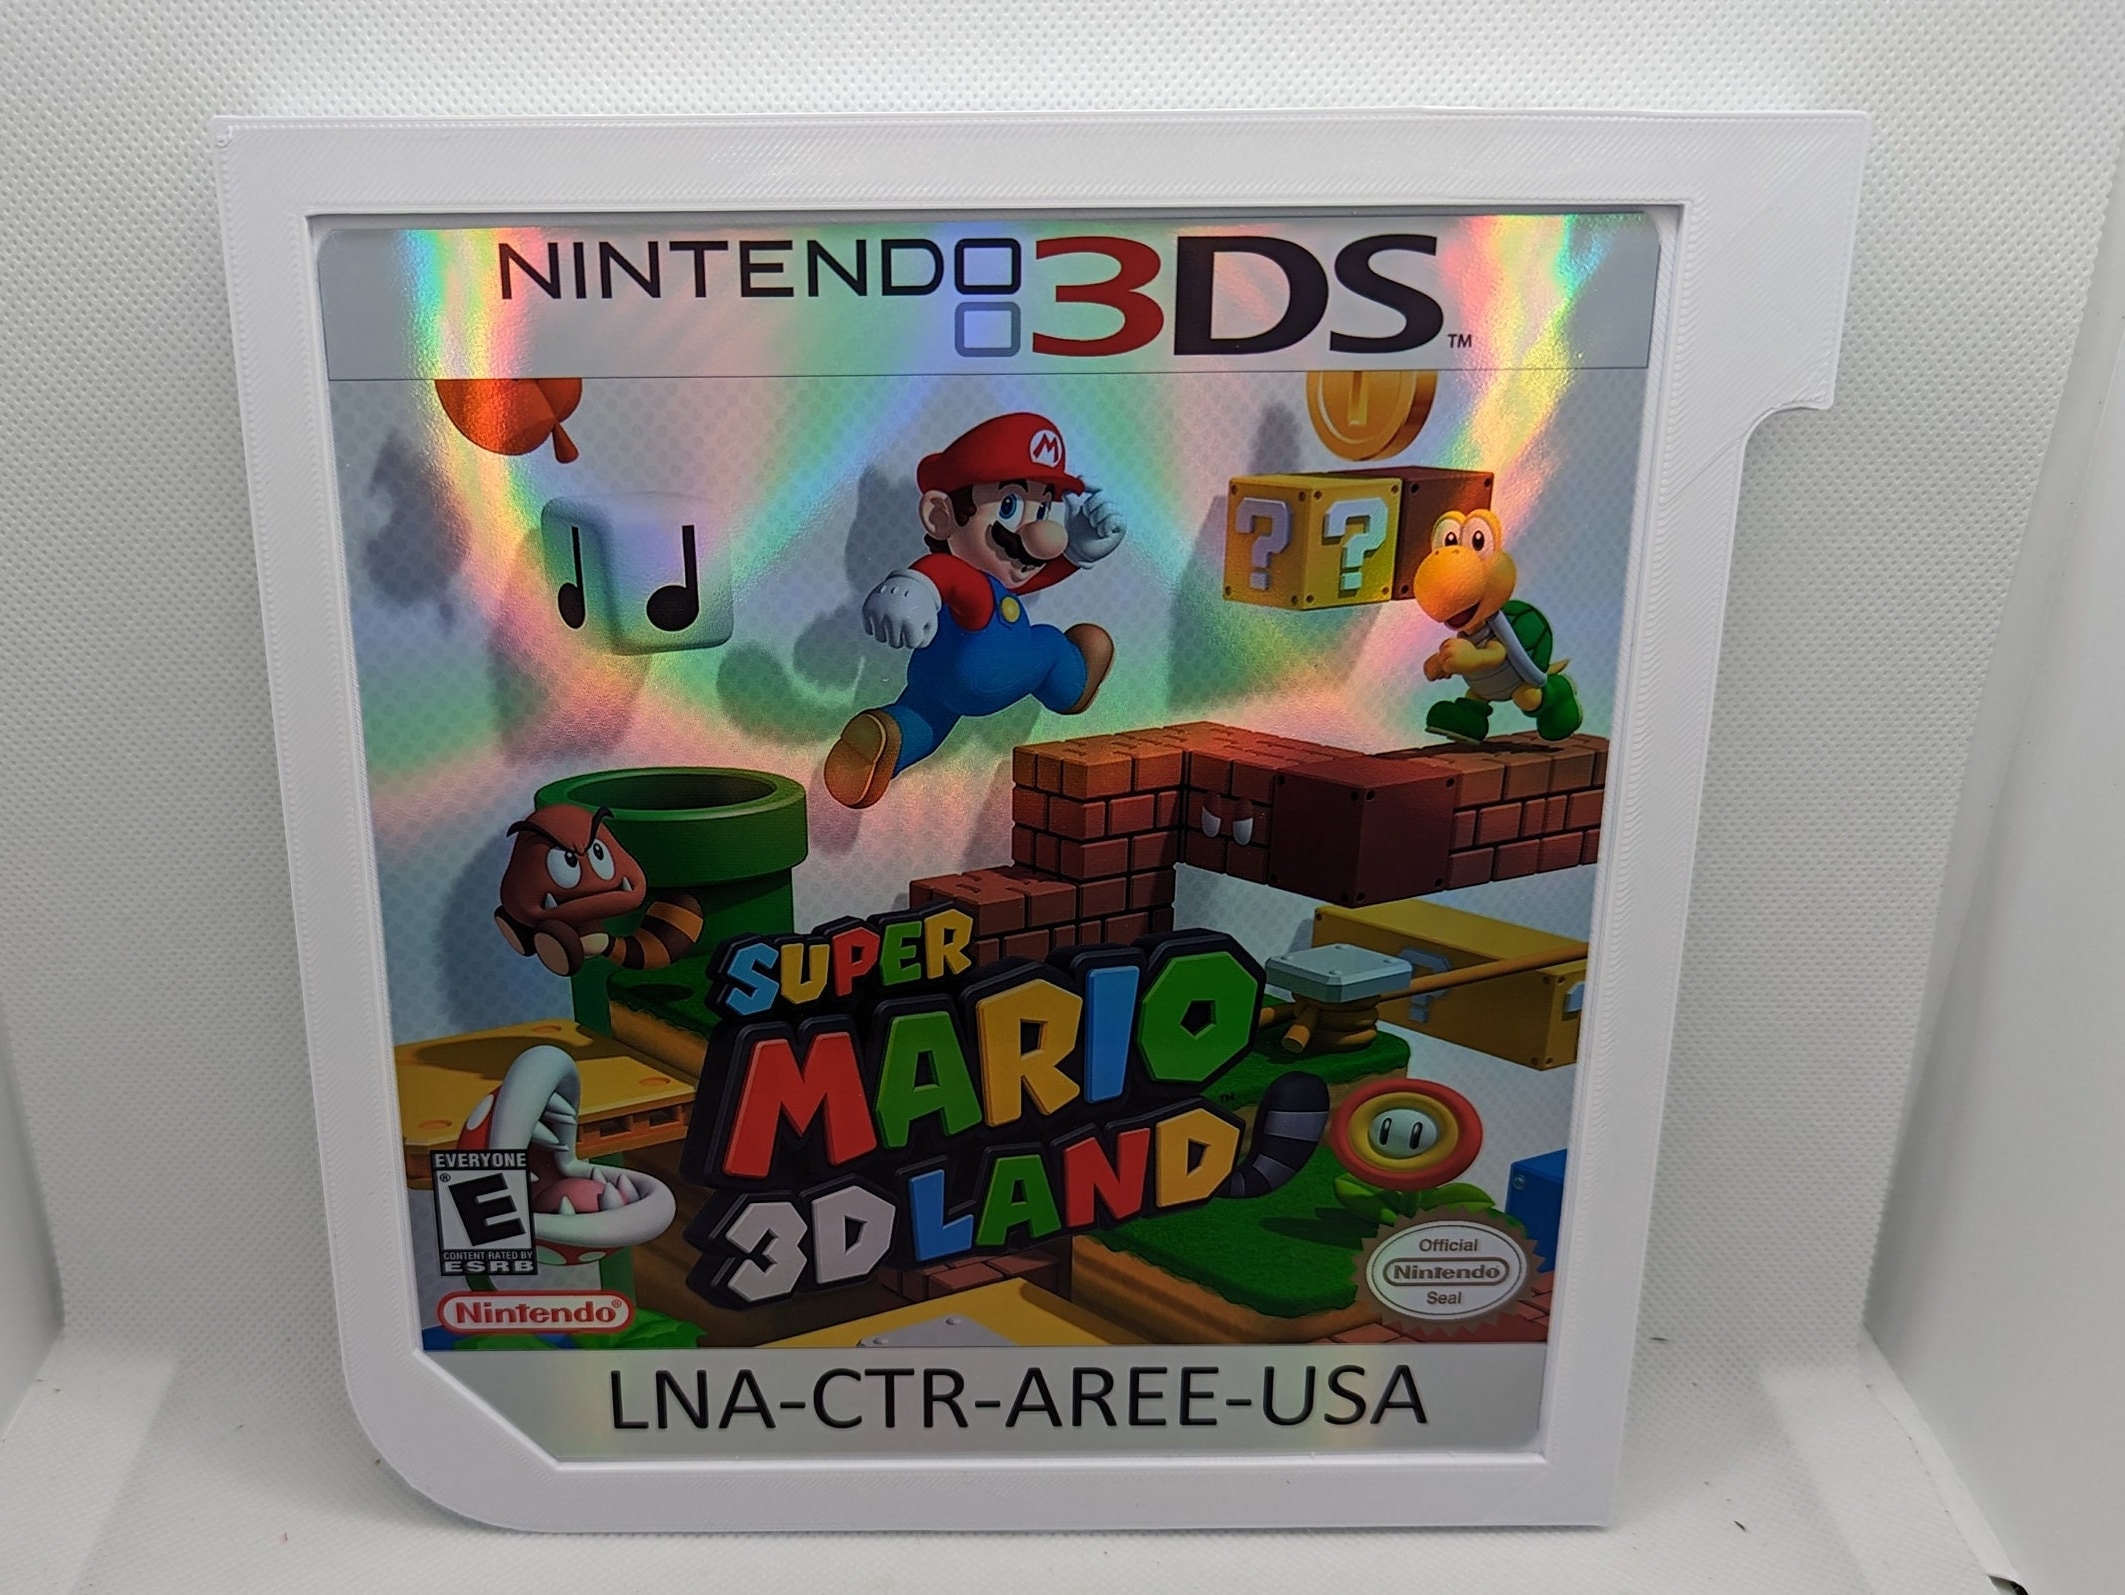 Giant Nintendo 3DS Cartridge Super Mario 3D Land Etsy